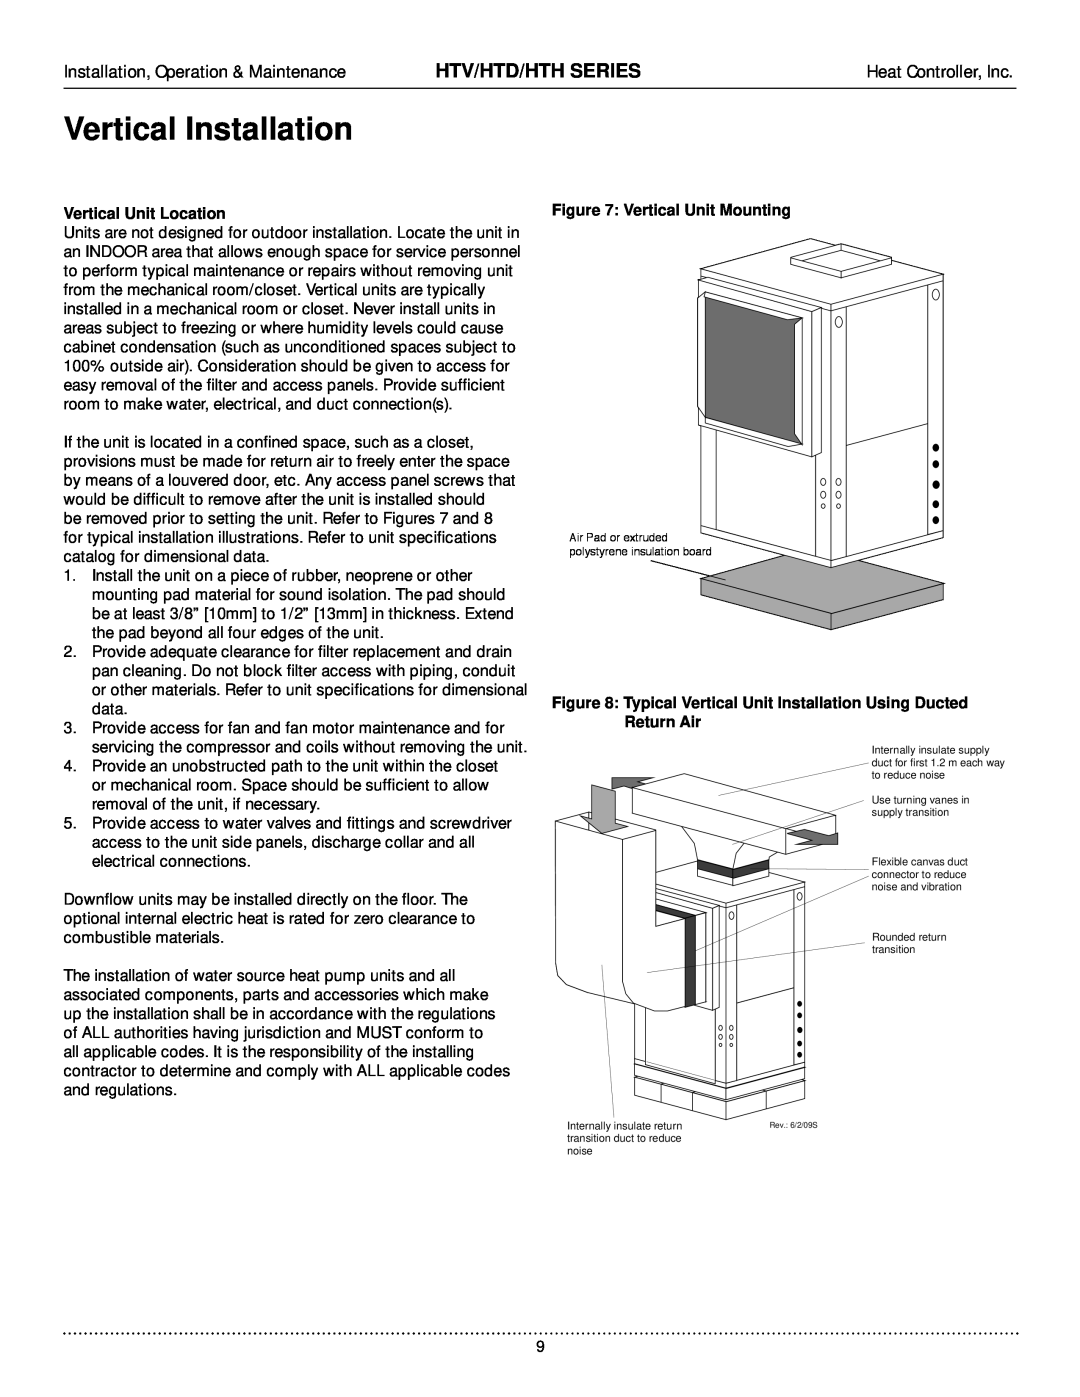 Heat Controller HTV Vertical Installation, Htv/Htd/Hth Series, Installation, Operation & Maintenance, Heat Controller, Inc 